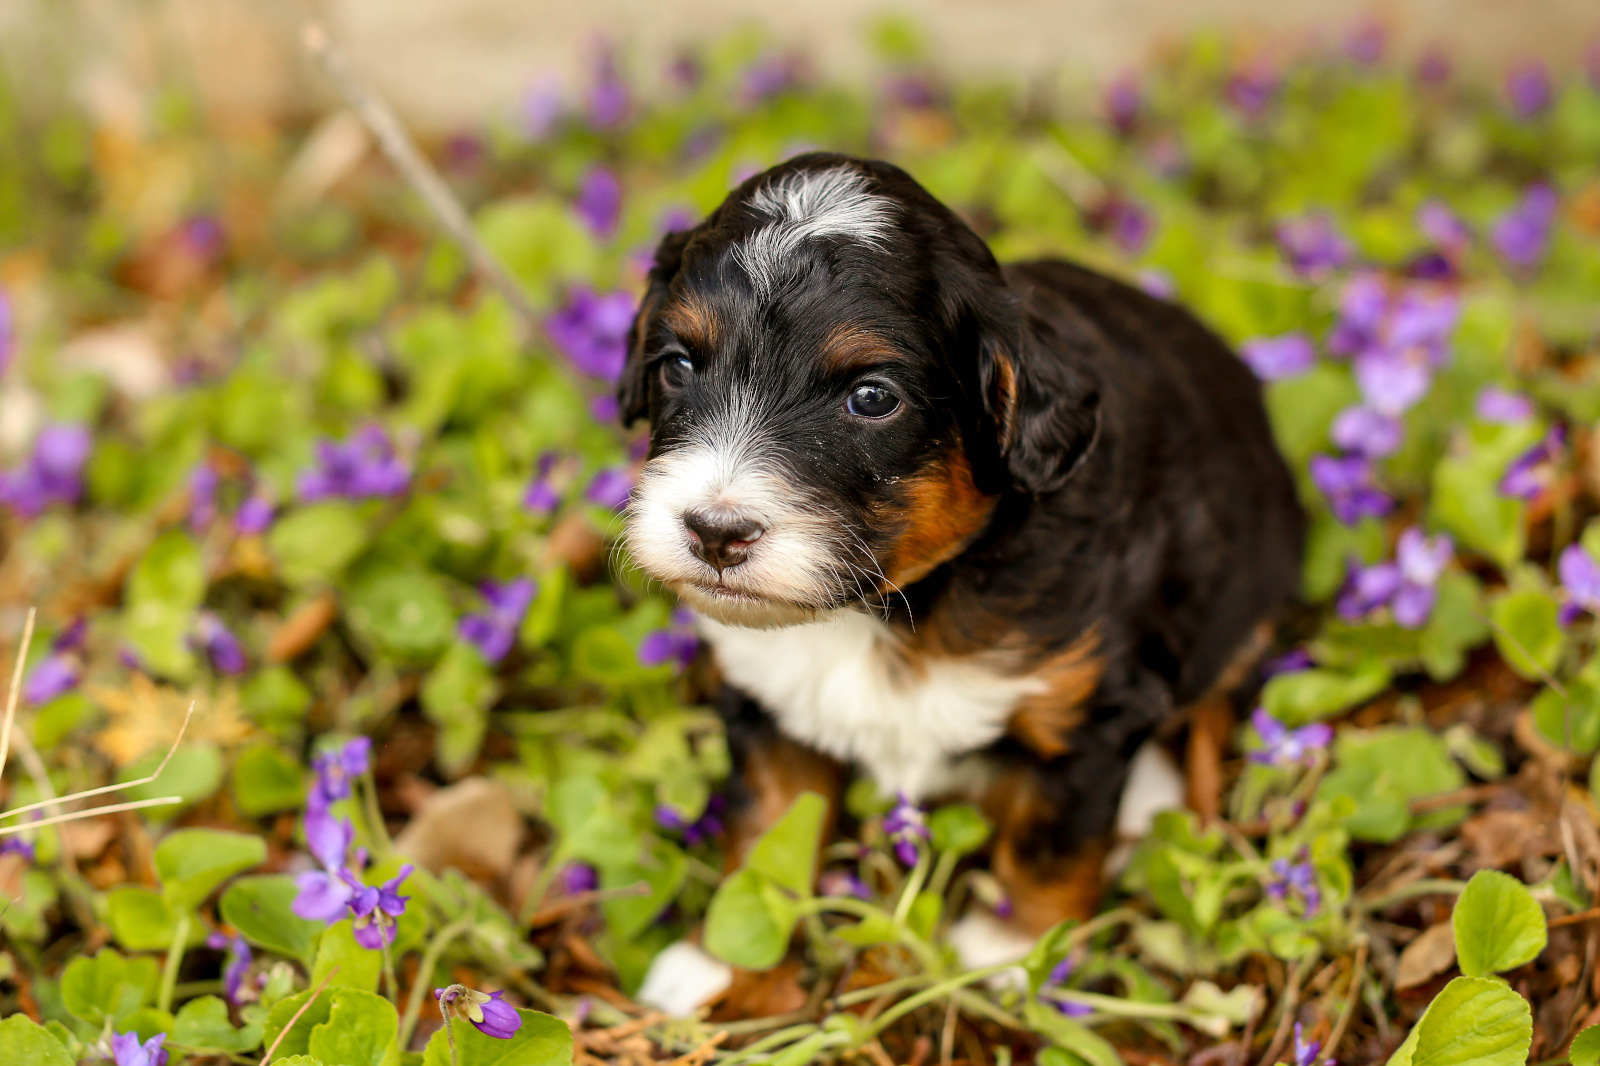 A puppy amongst wildflowers